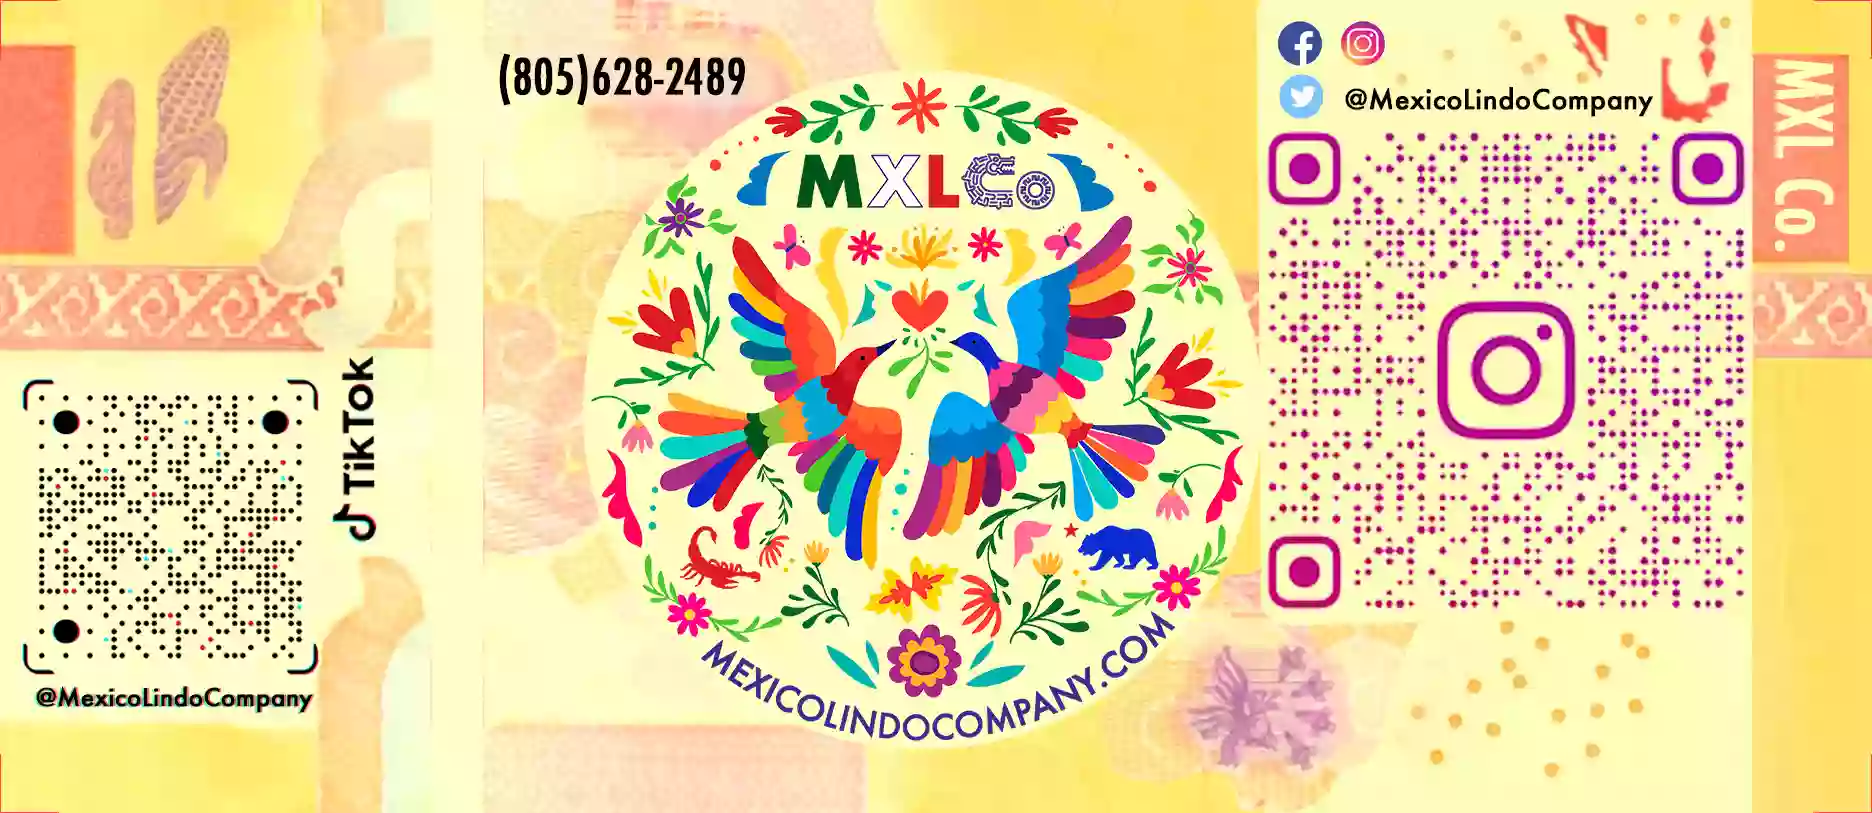 Mexico Lindo Company